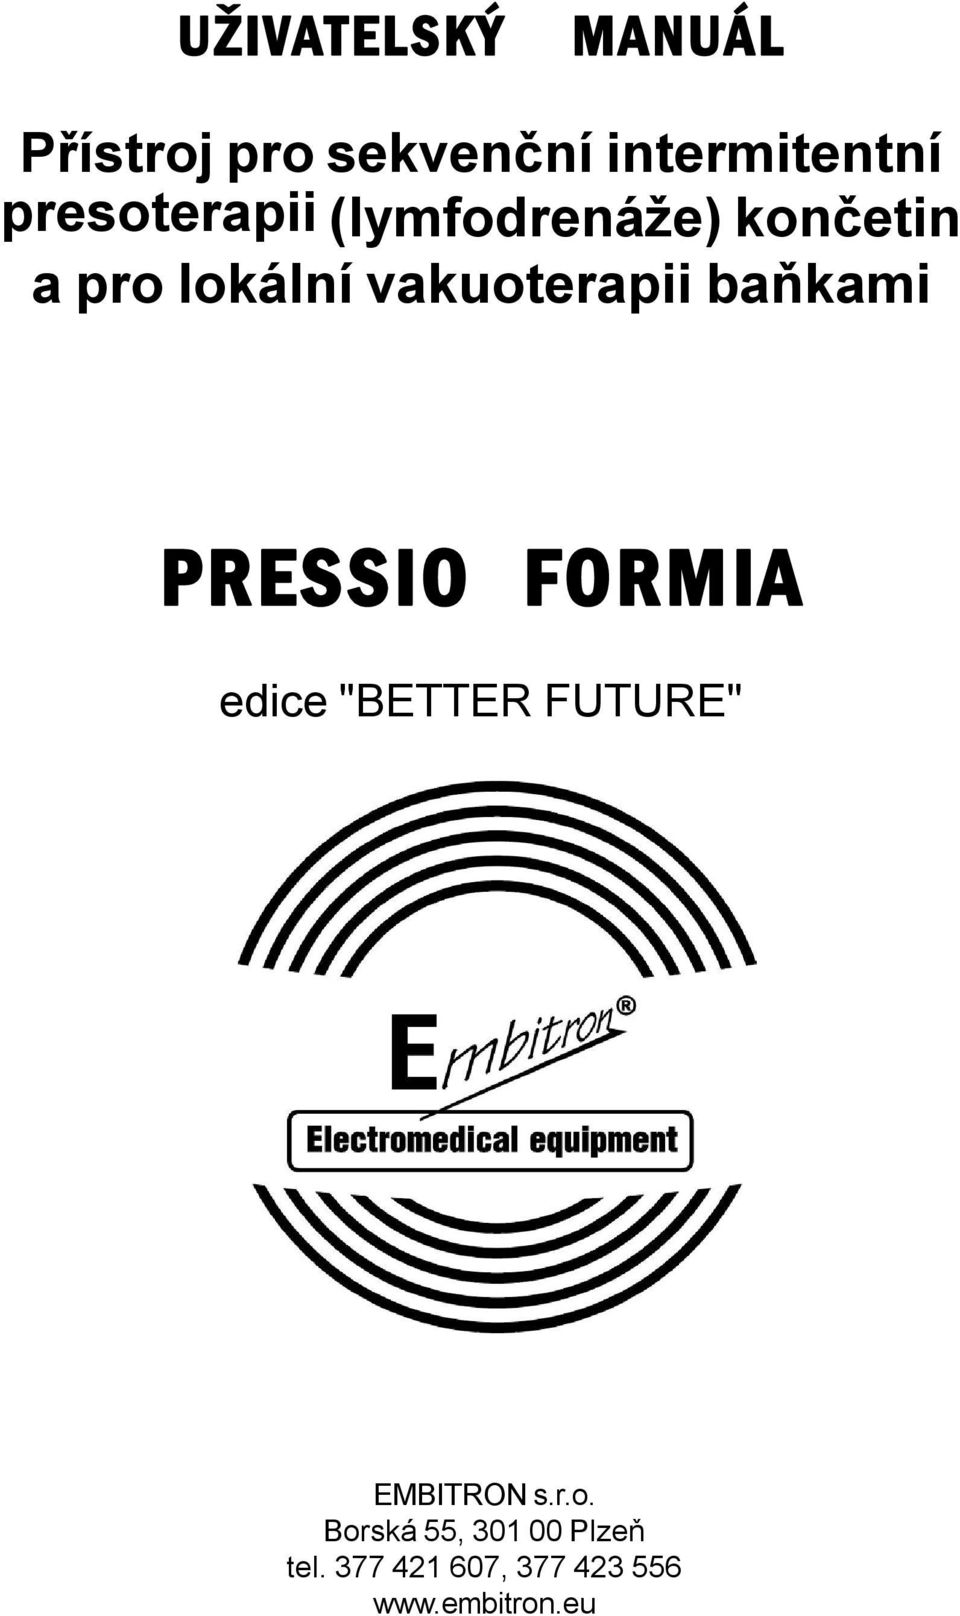 vakuoterapii baňkami PRESSIO FORMIA edice "BETTER FUTURE"